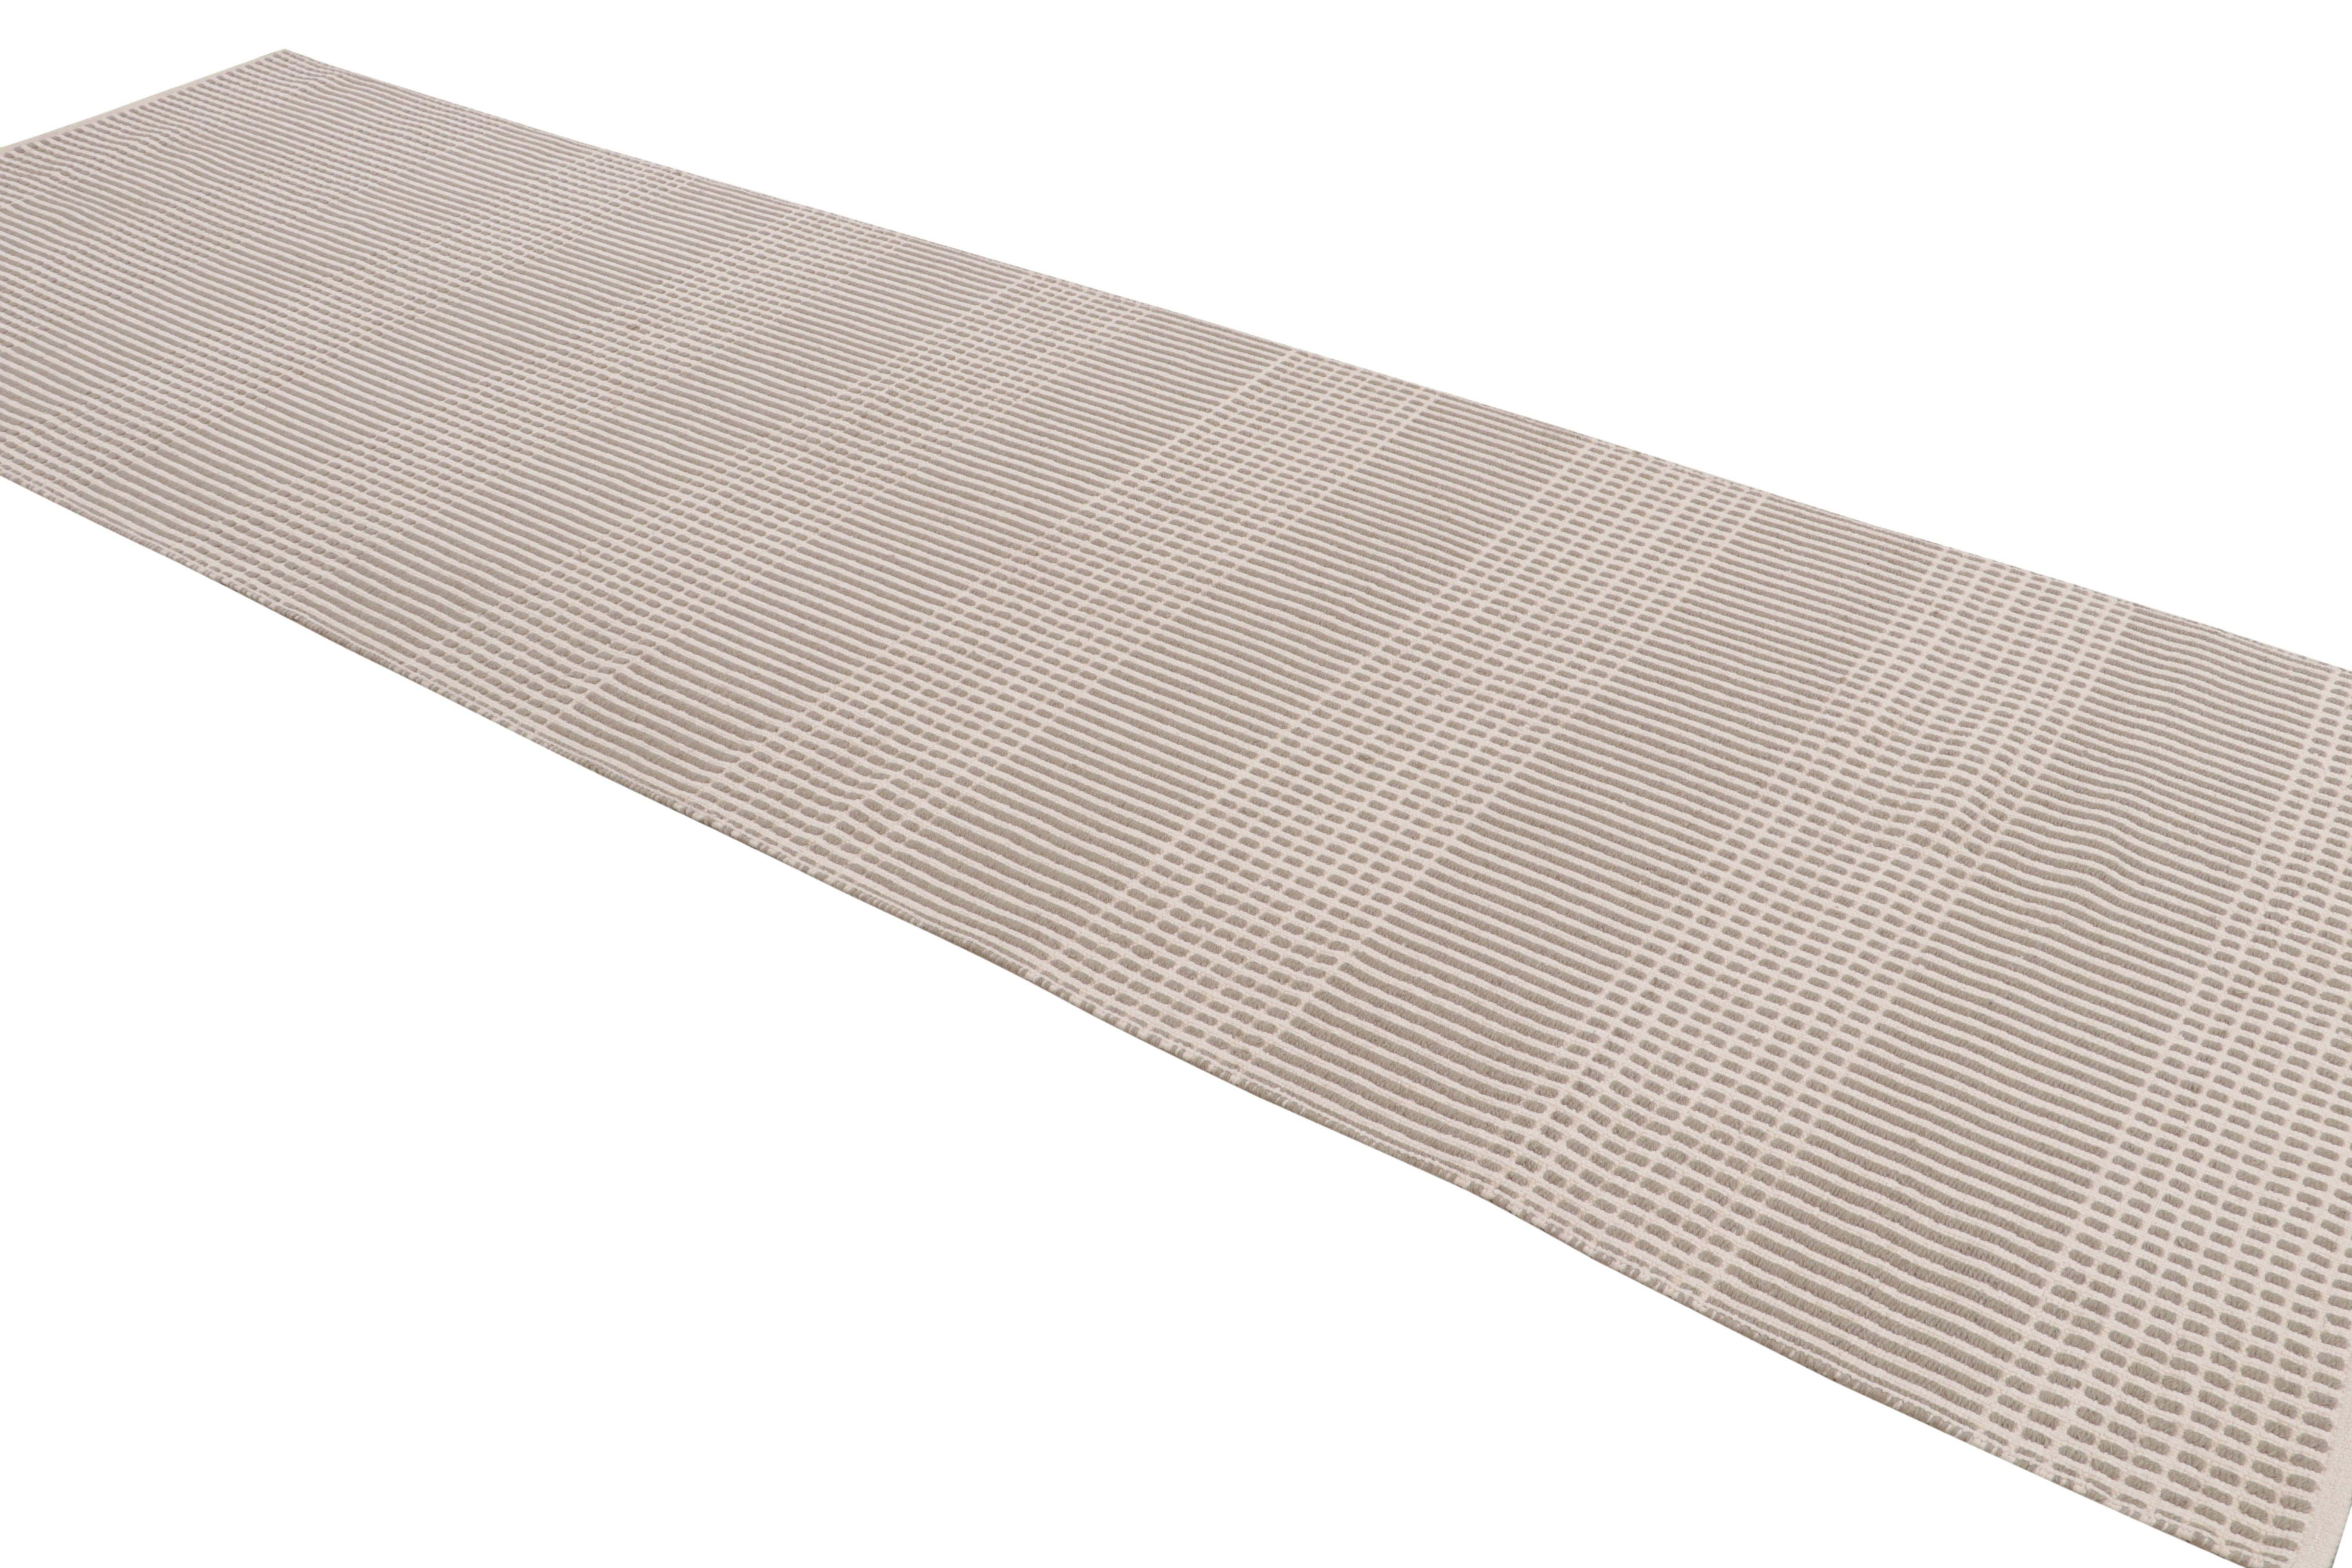 Indian Rug & Kilim's Modern Flat-Weave Beige Brown Geometric Striped Pattern For Sale